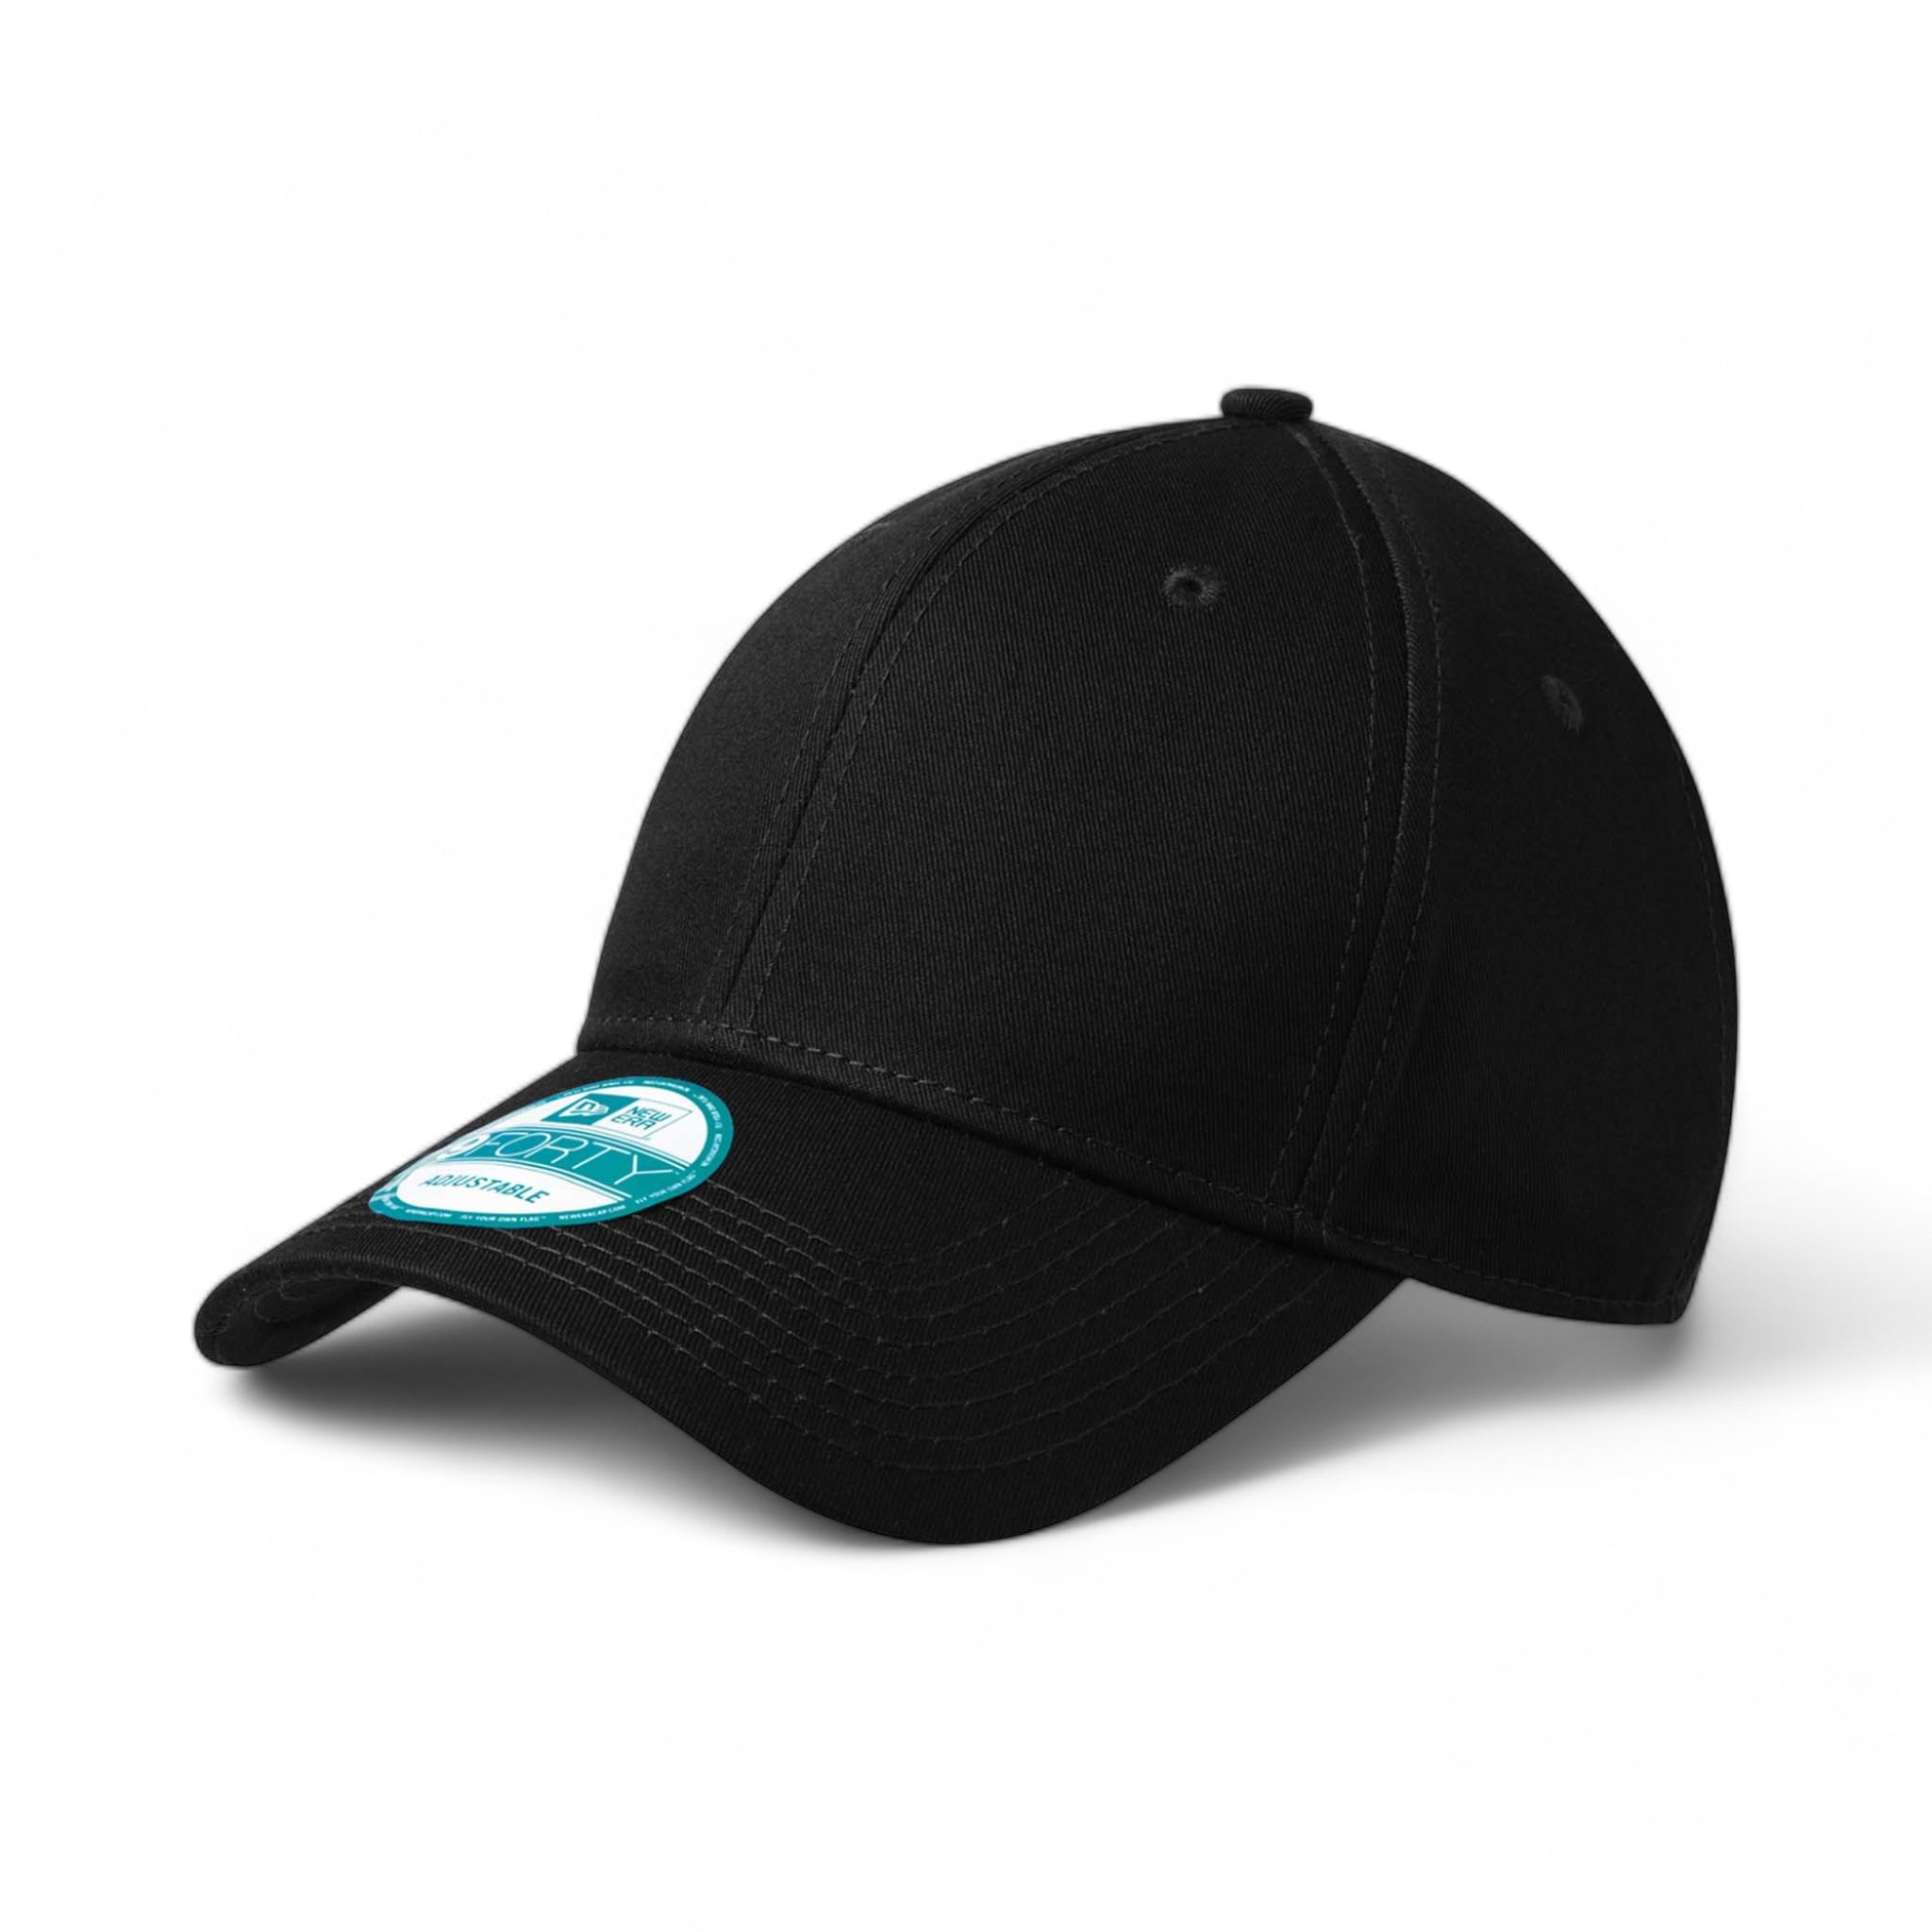 Side view of New Era NE200 custom hat in black